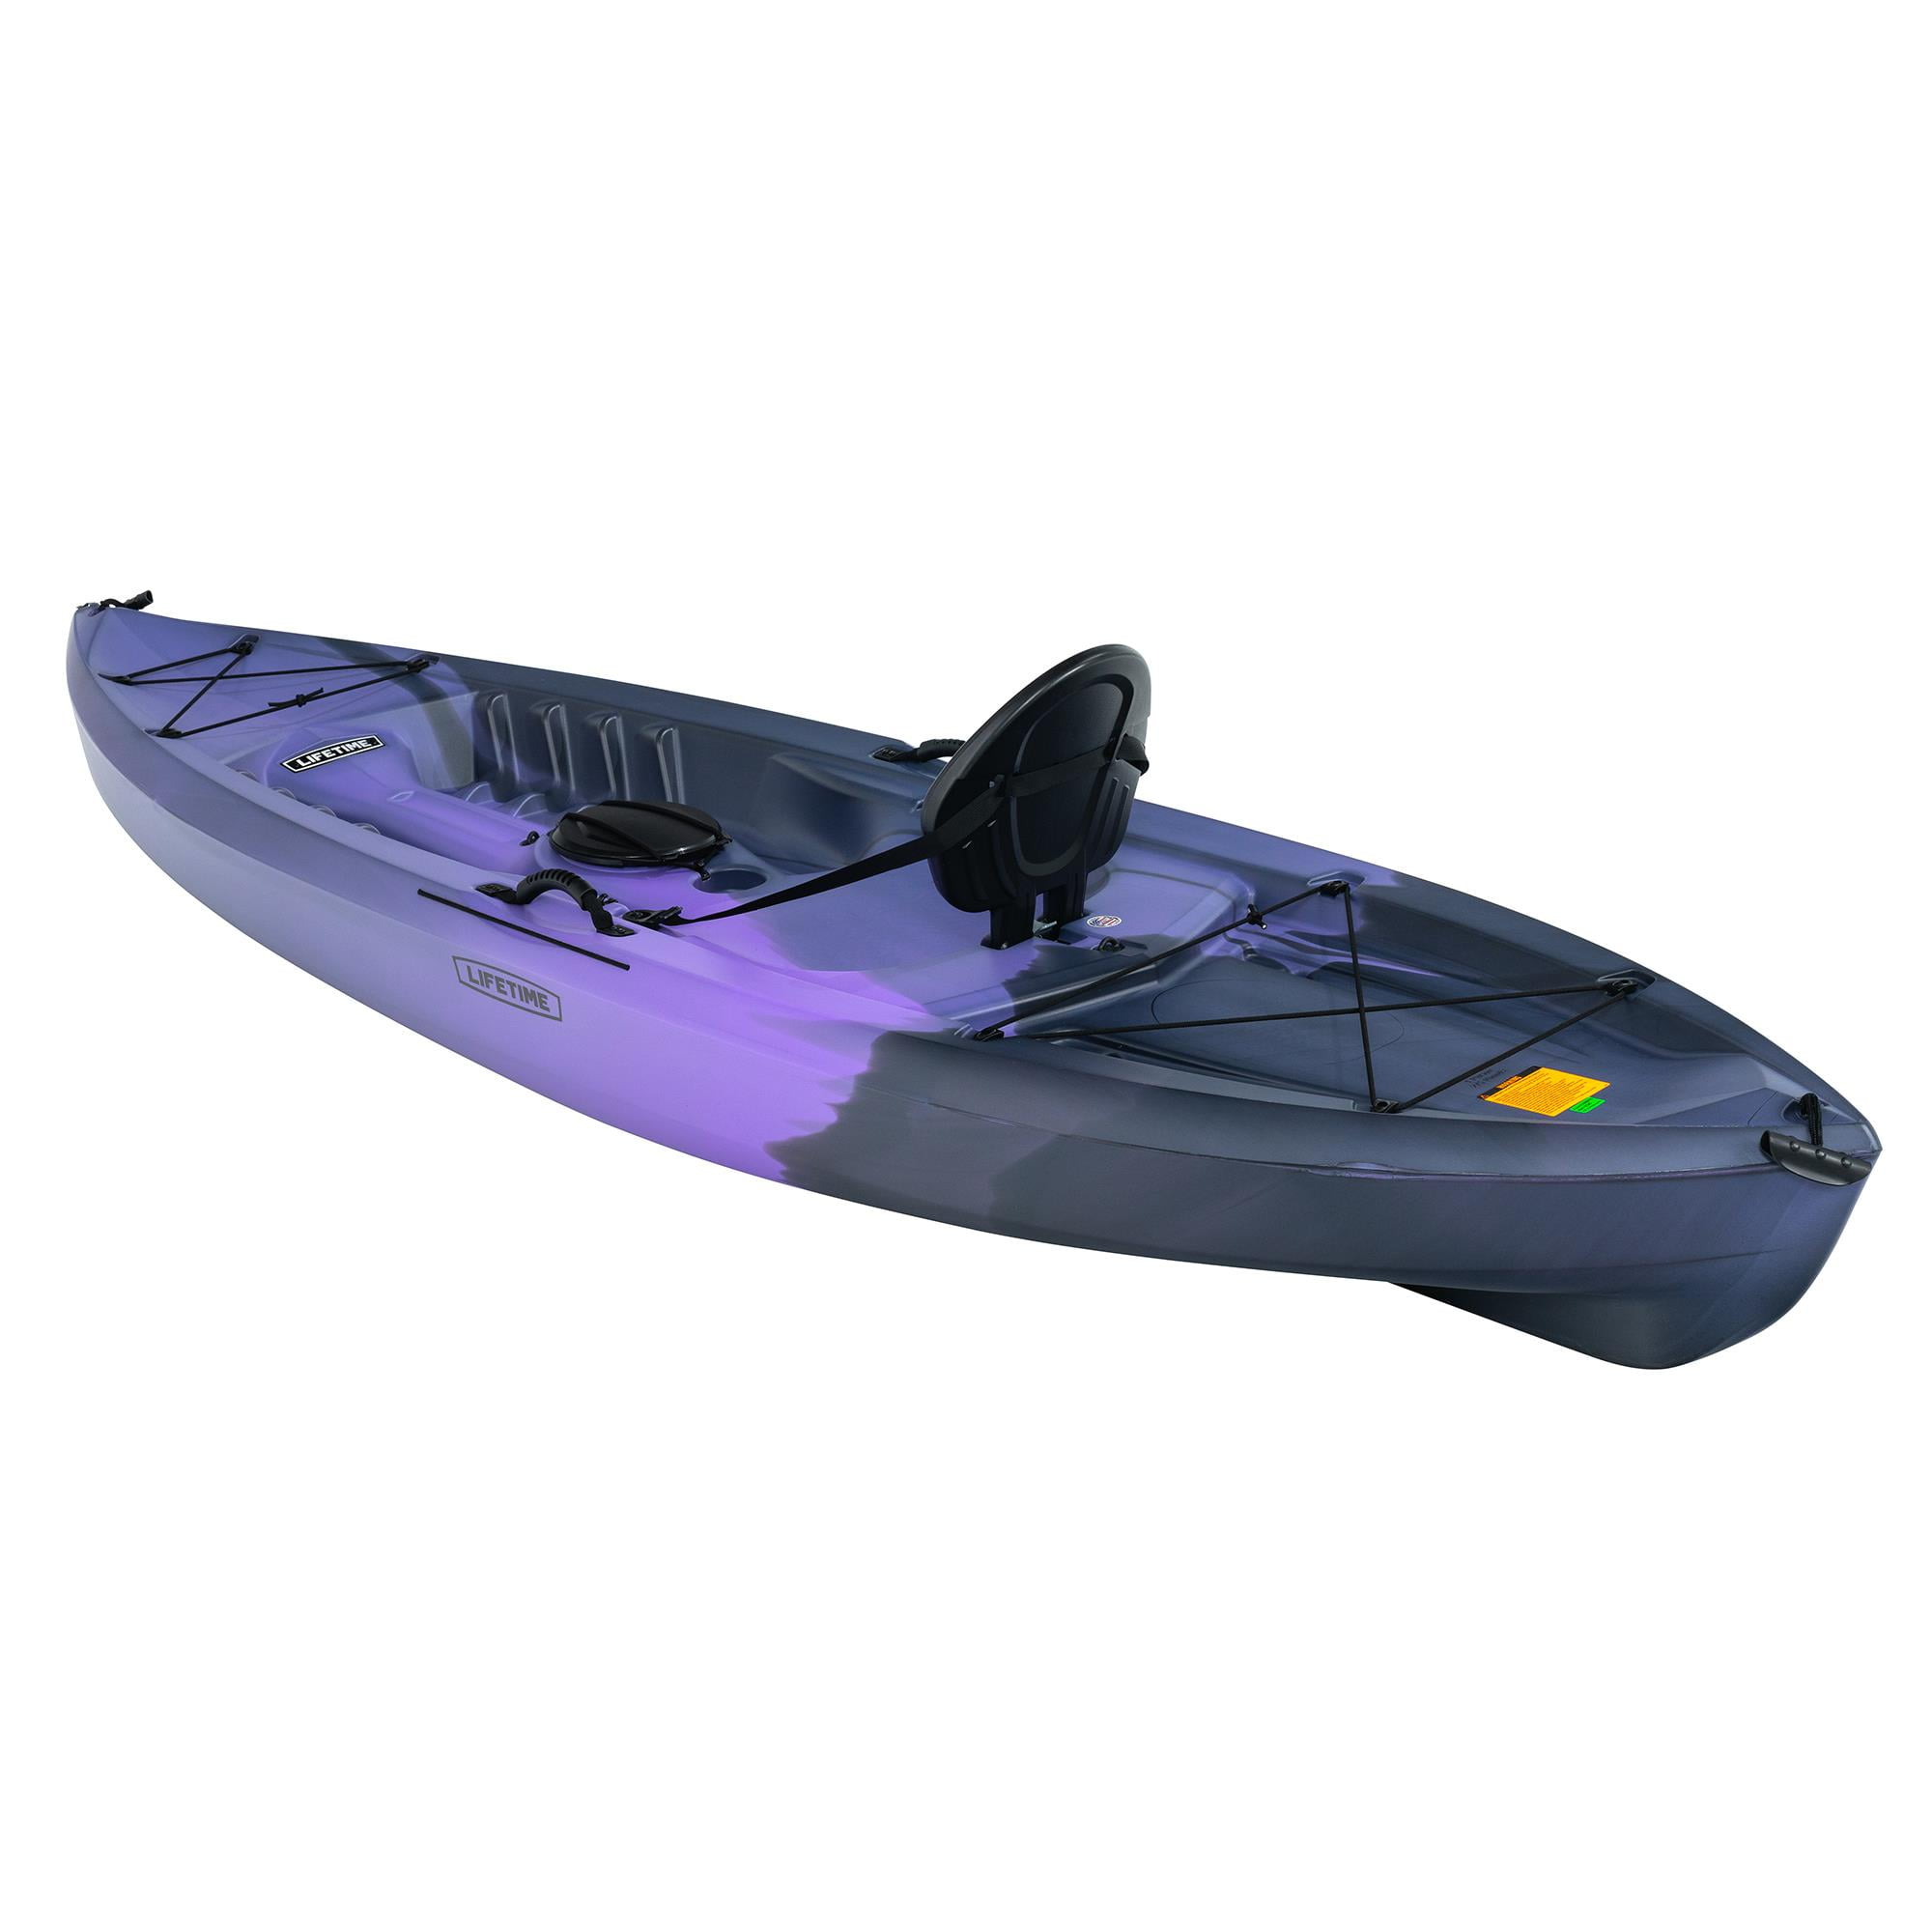 Lifetime Tahoma 10 ft. Sit-on-Top Kayak, Emperor Fusion (91346)